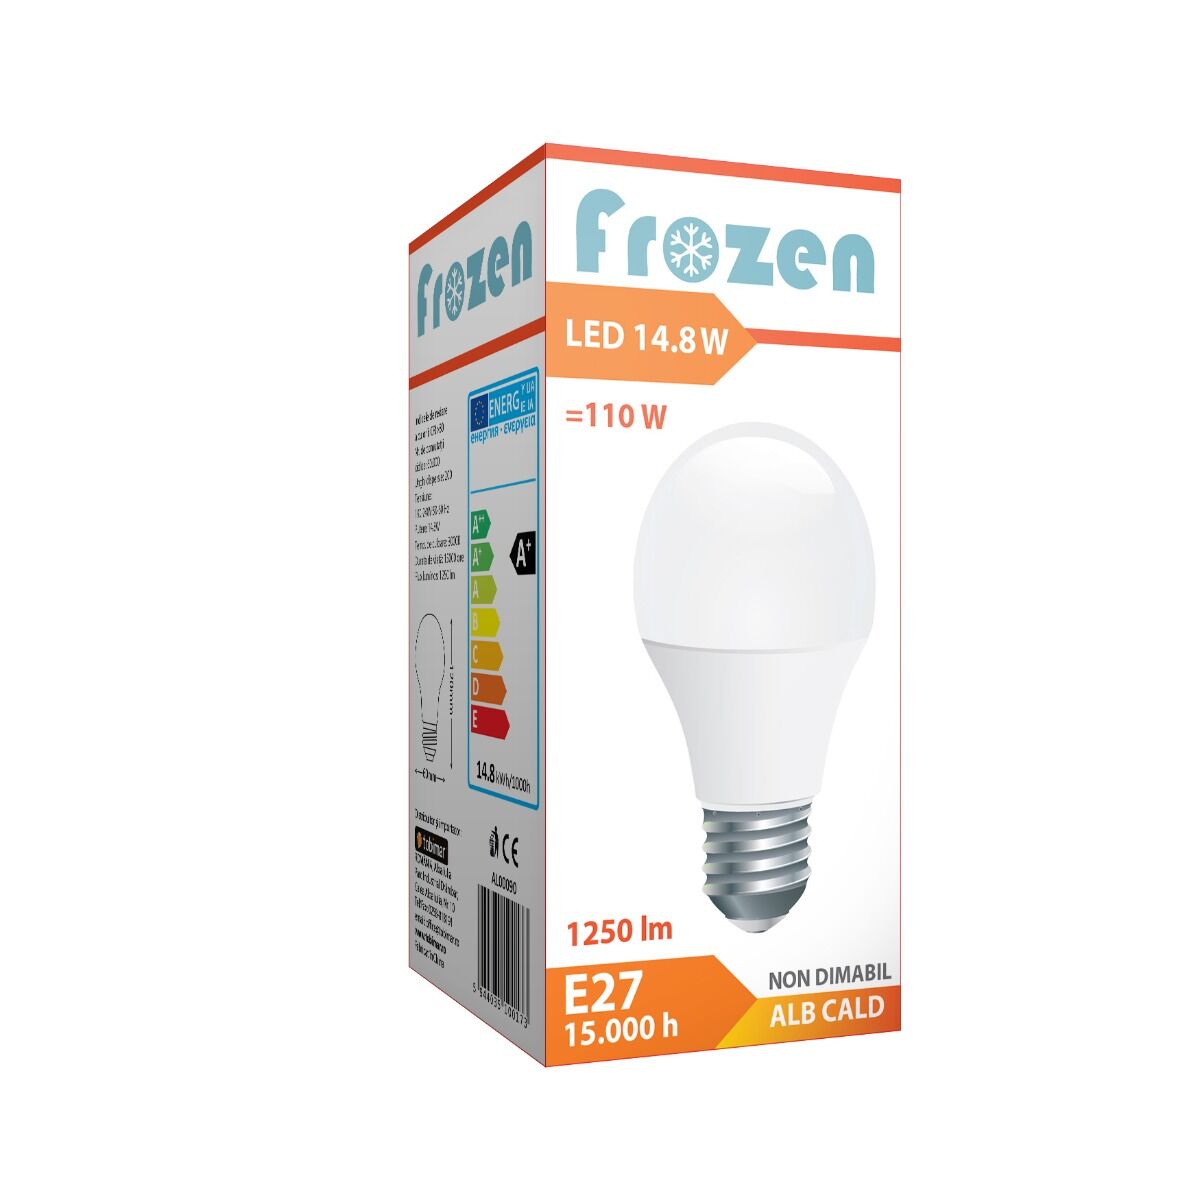 Bec LED Frozen, putere 14.8W, echivalent 110W, dulie E27, lumina calda, flux luminos 1250 lumeni